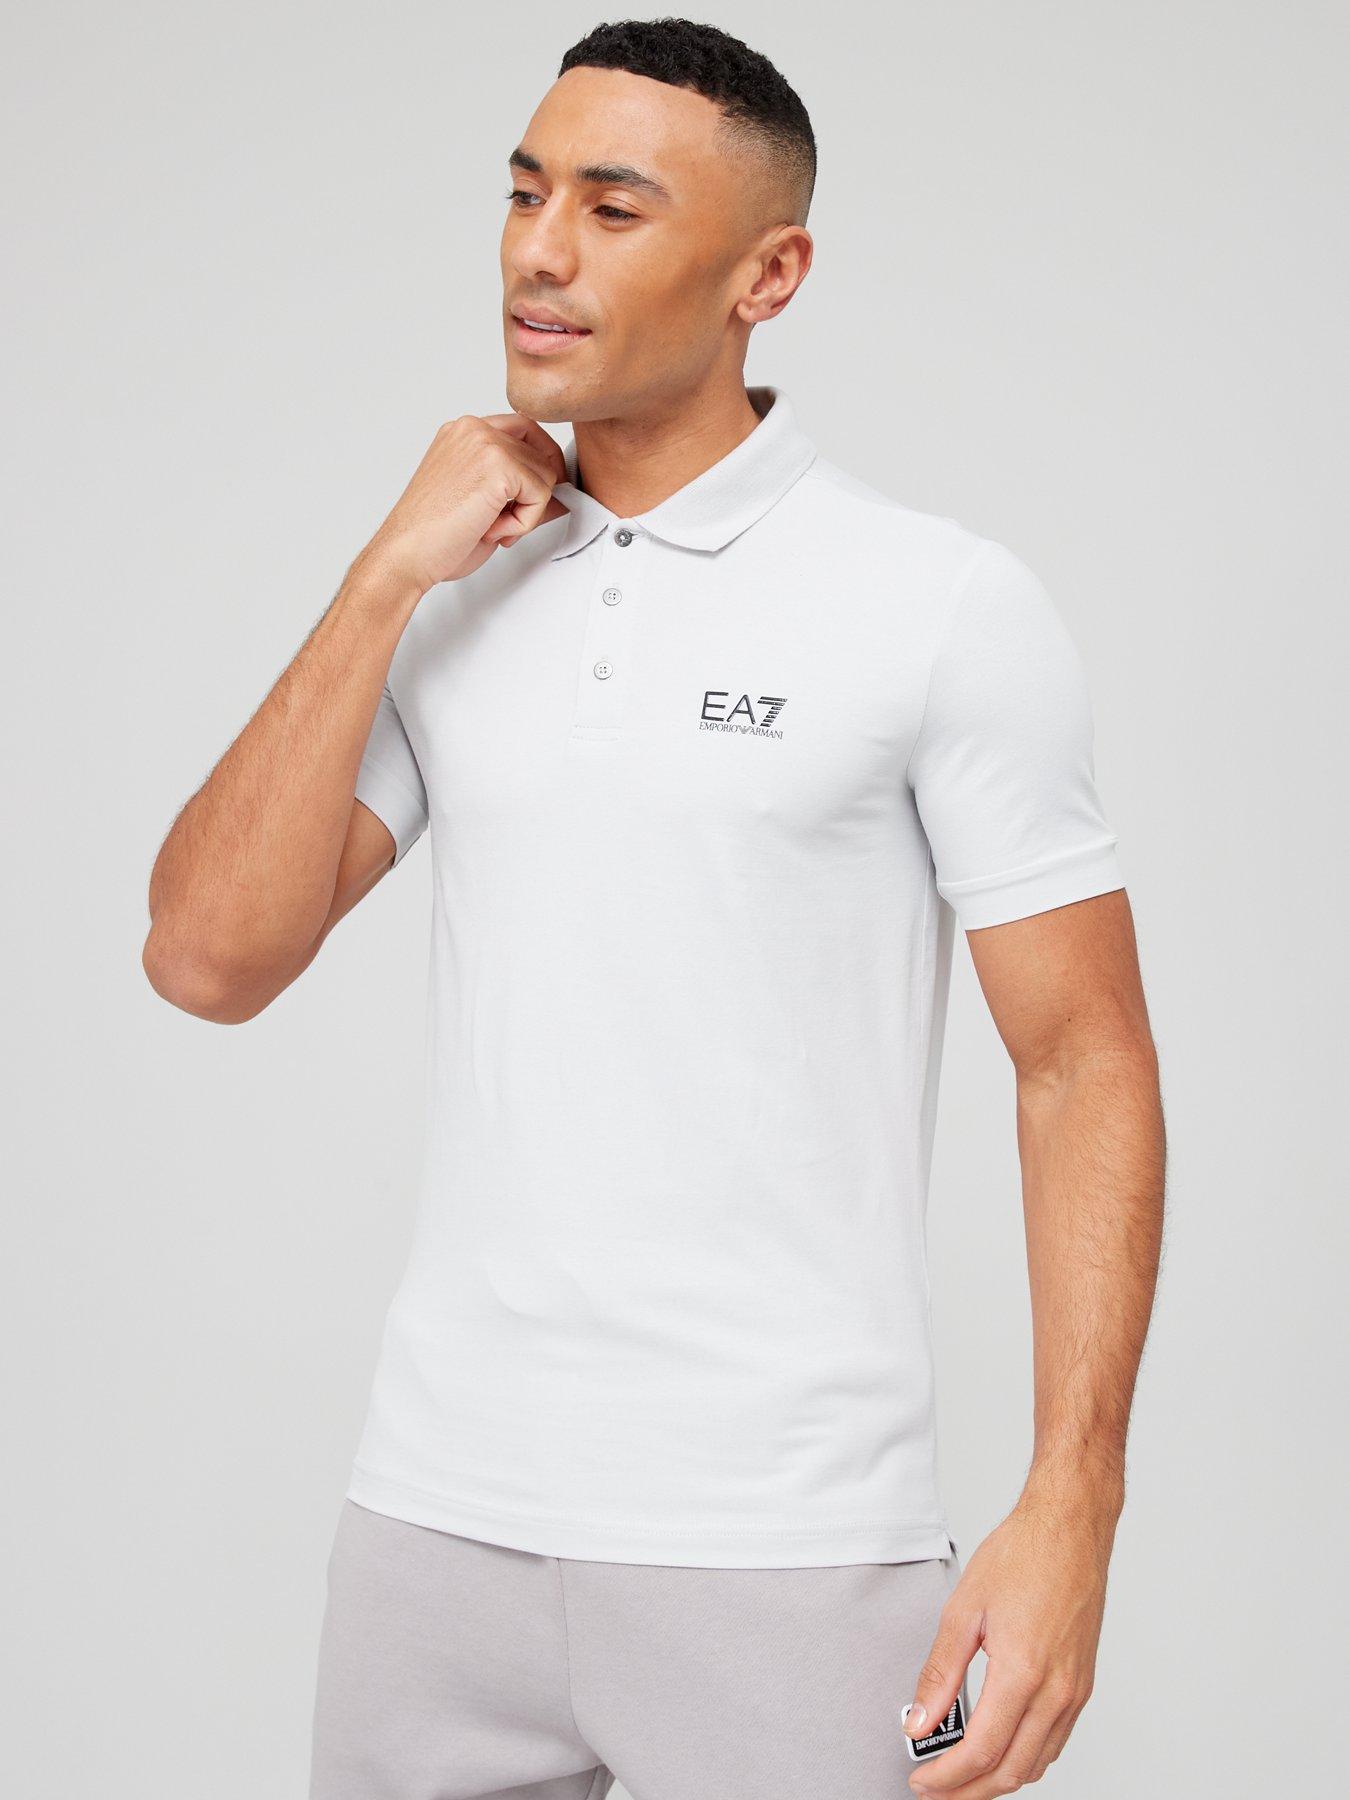 Encommium In zicht Overleving Grey | Ea7 emporio armani | T-shirts & polos | Men | Very Ireland